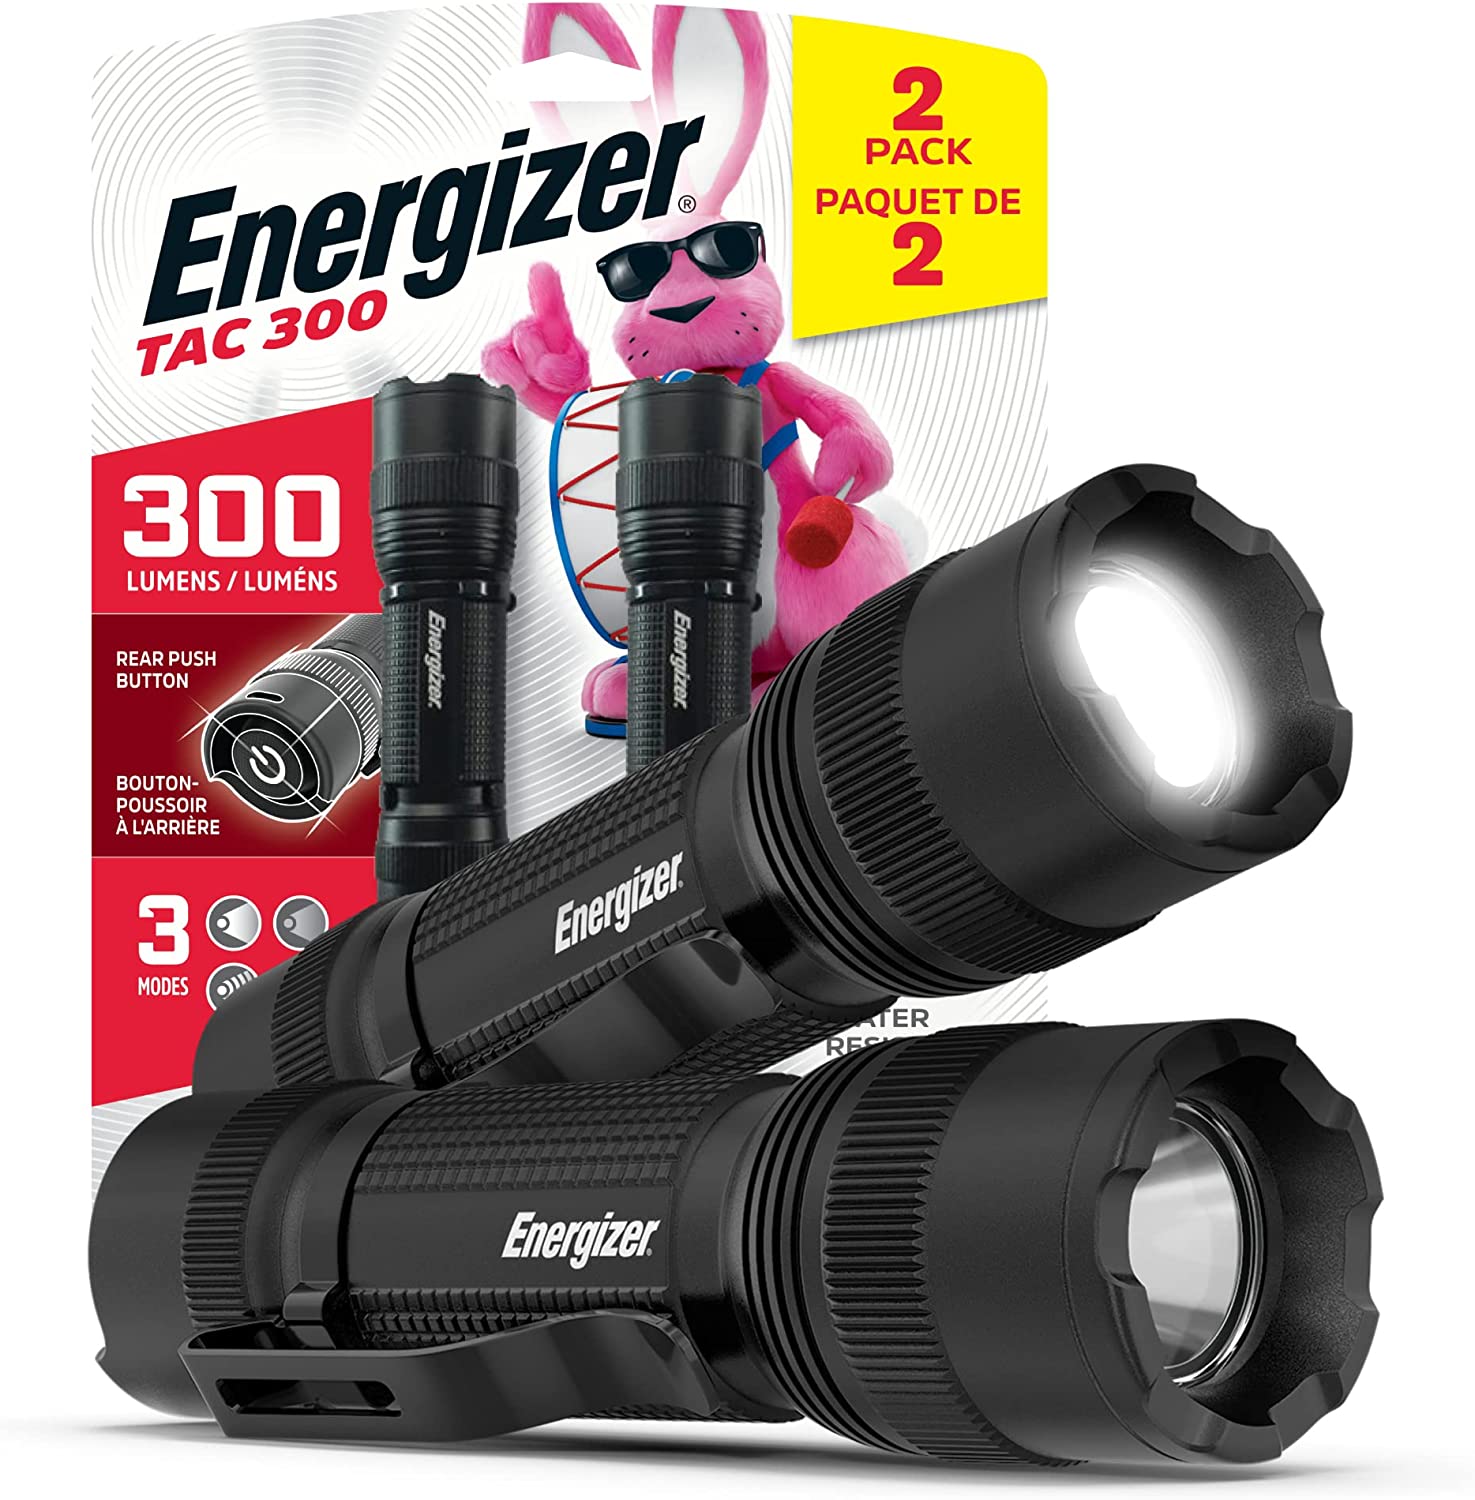 2-Pack Energizer LED IPX4 300 Lumen Flashlights w/ Belt Clip (TAC-300) $10.80 + Free Shipping w/ Prime or on $25+